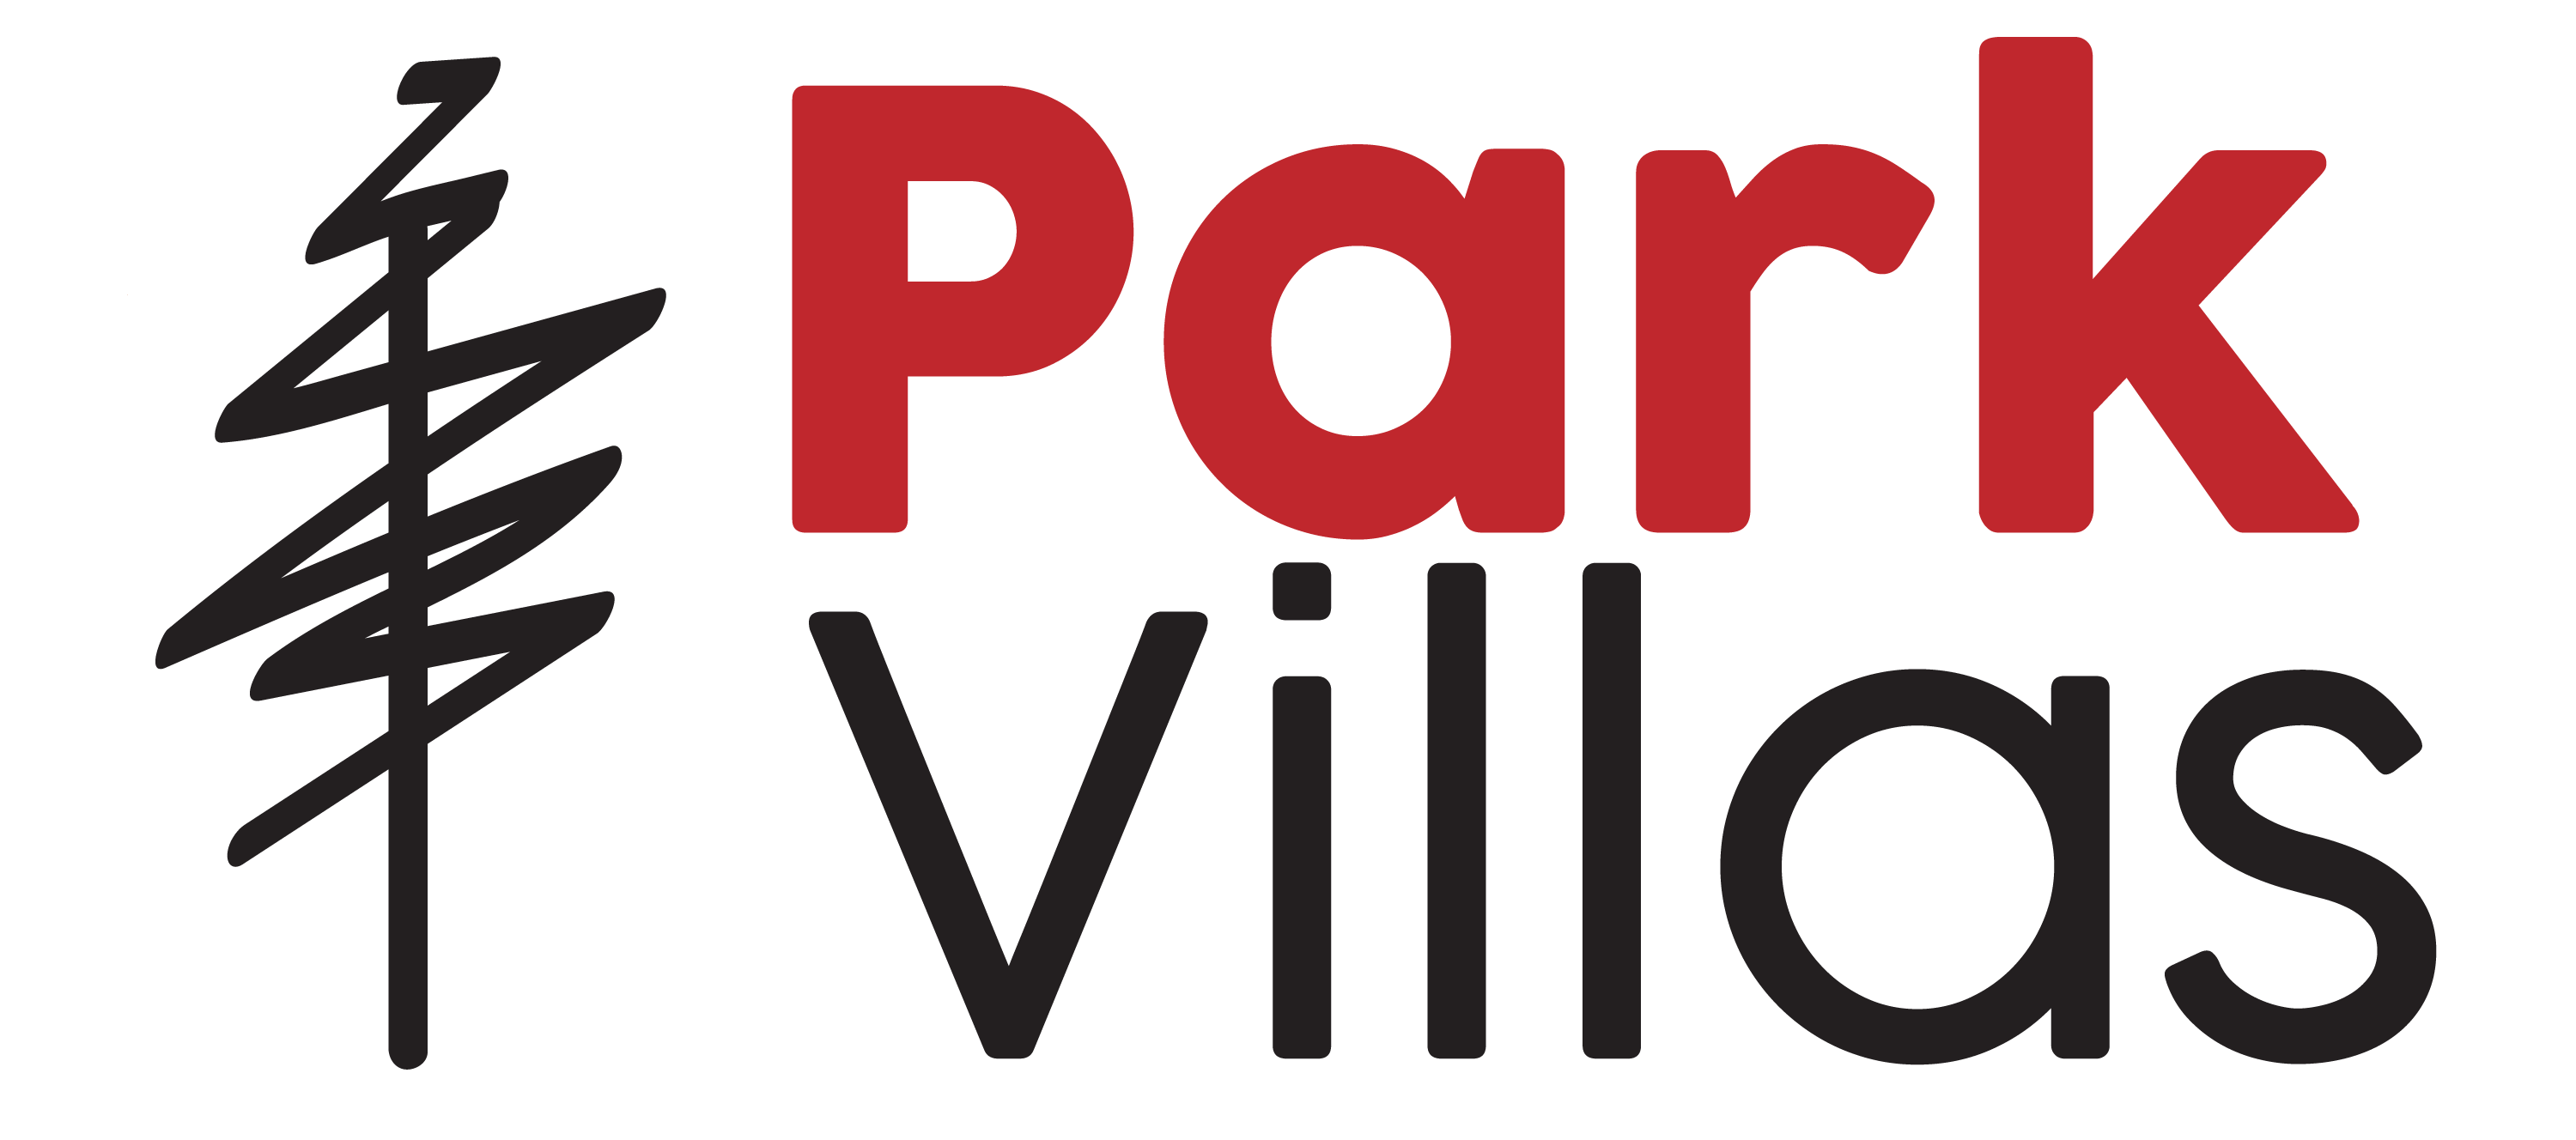 Park Villas